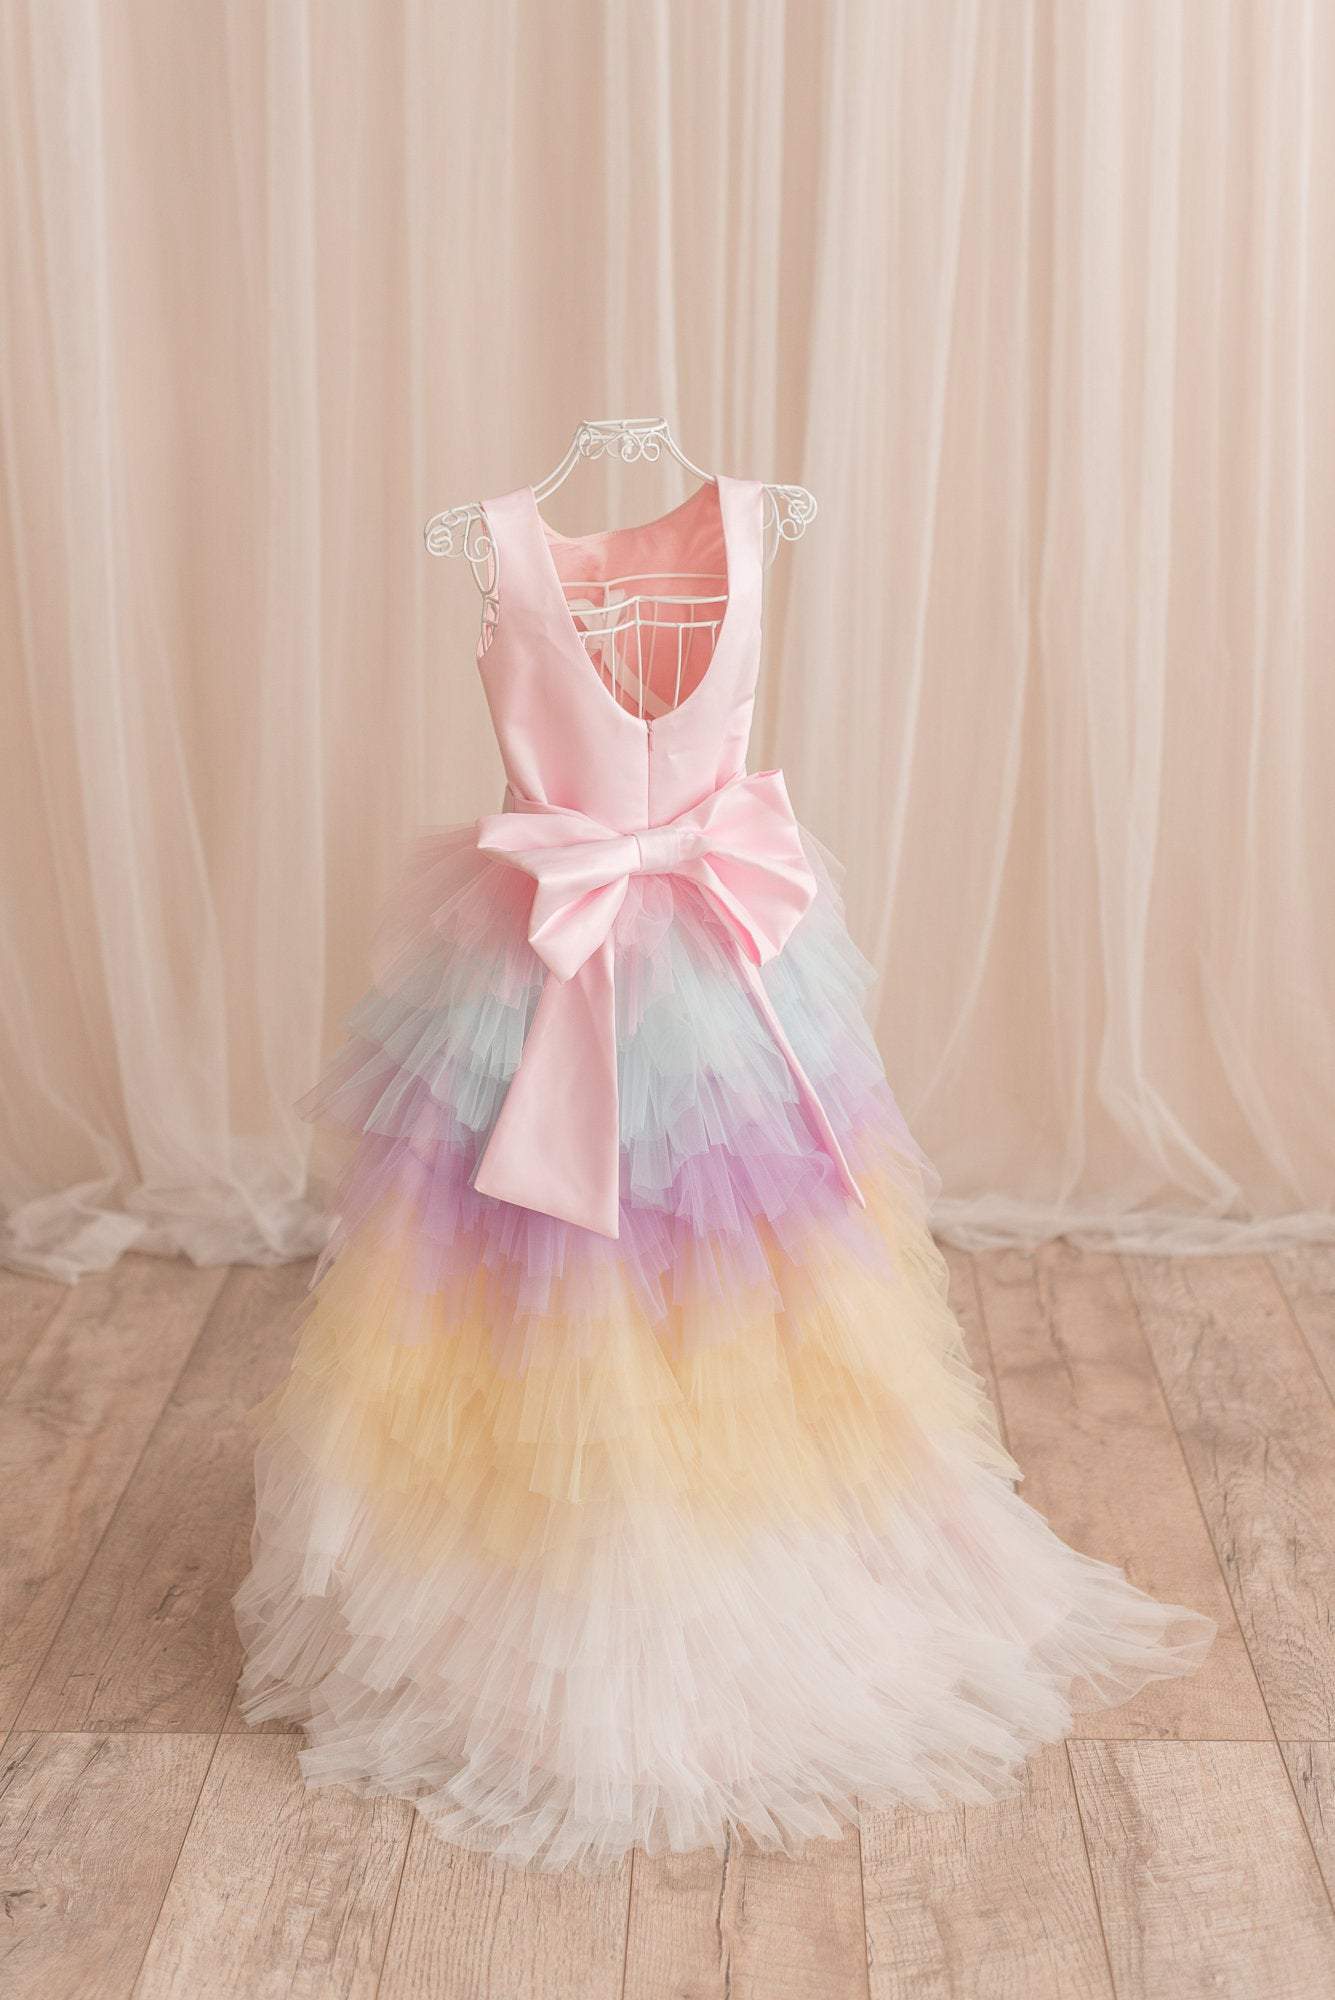 Matchinglook Girl Unicorn Dress, Rainbow Dress, Girl Tutu Dress, Tulle Dress, Flower Girl Dress, High Low Dress, 1st Birthday Dress, Toddler Gown Dress 7